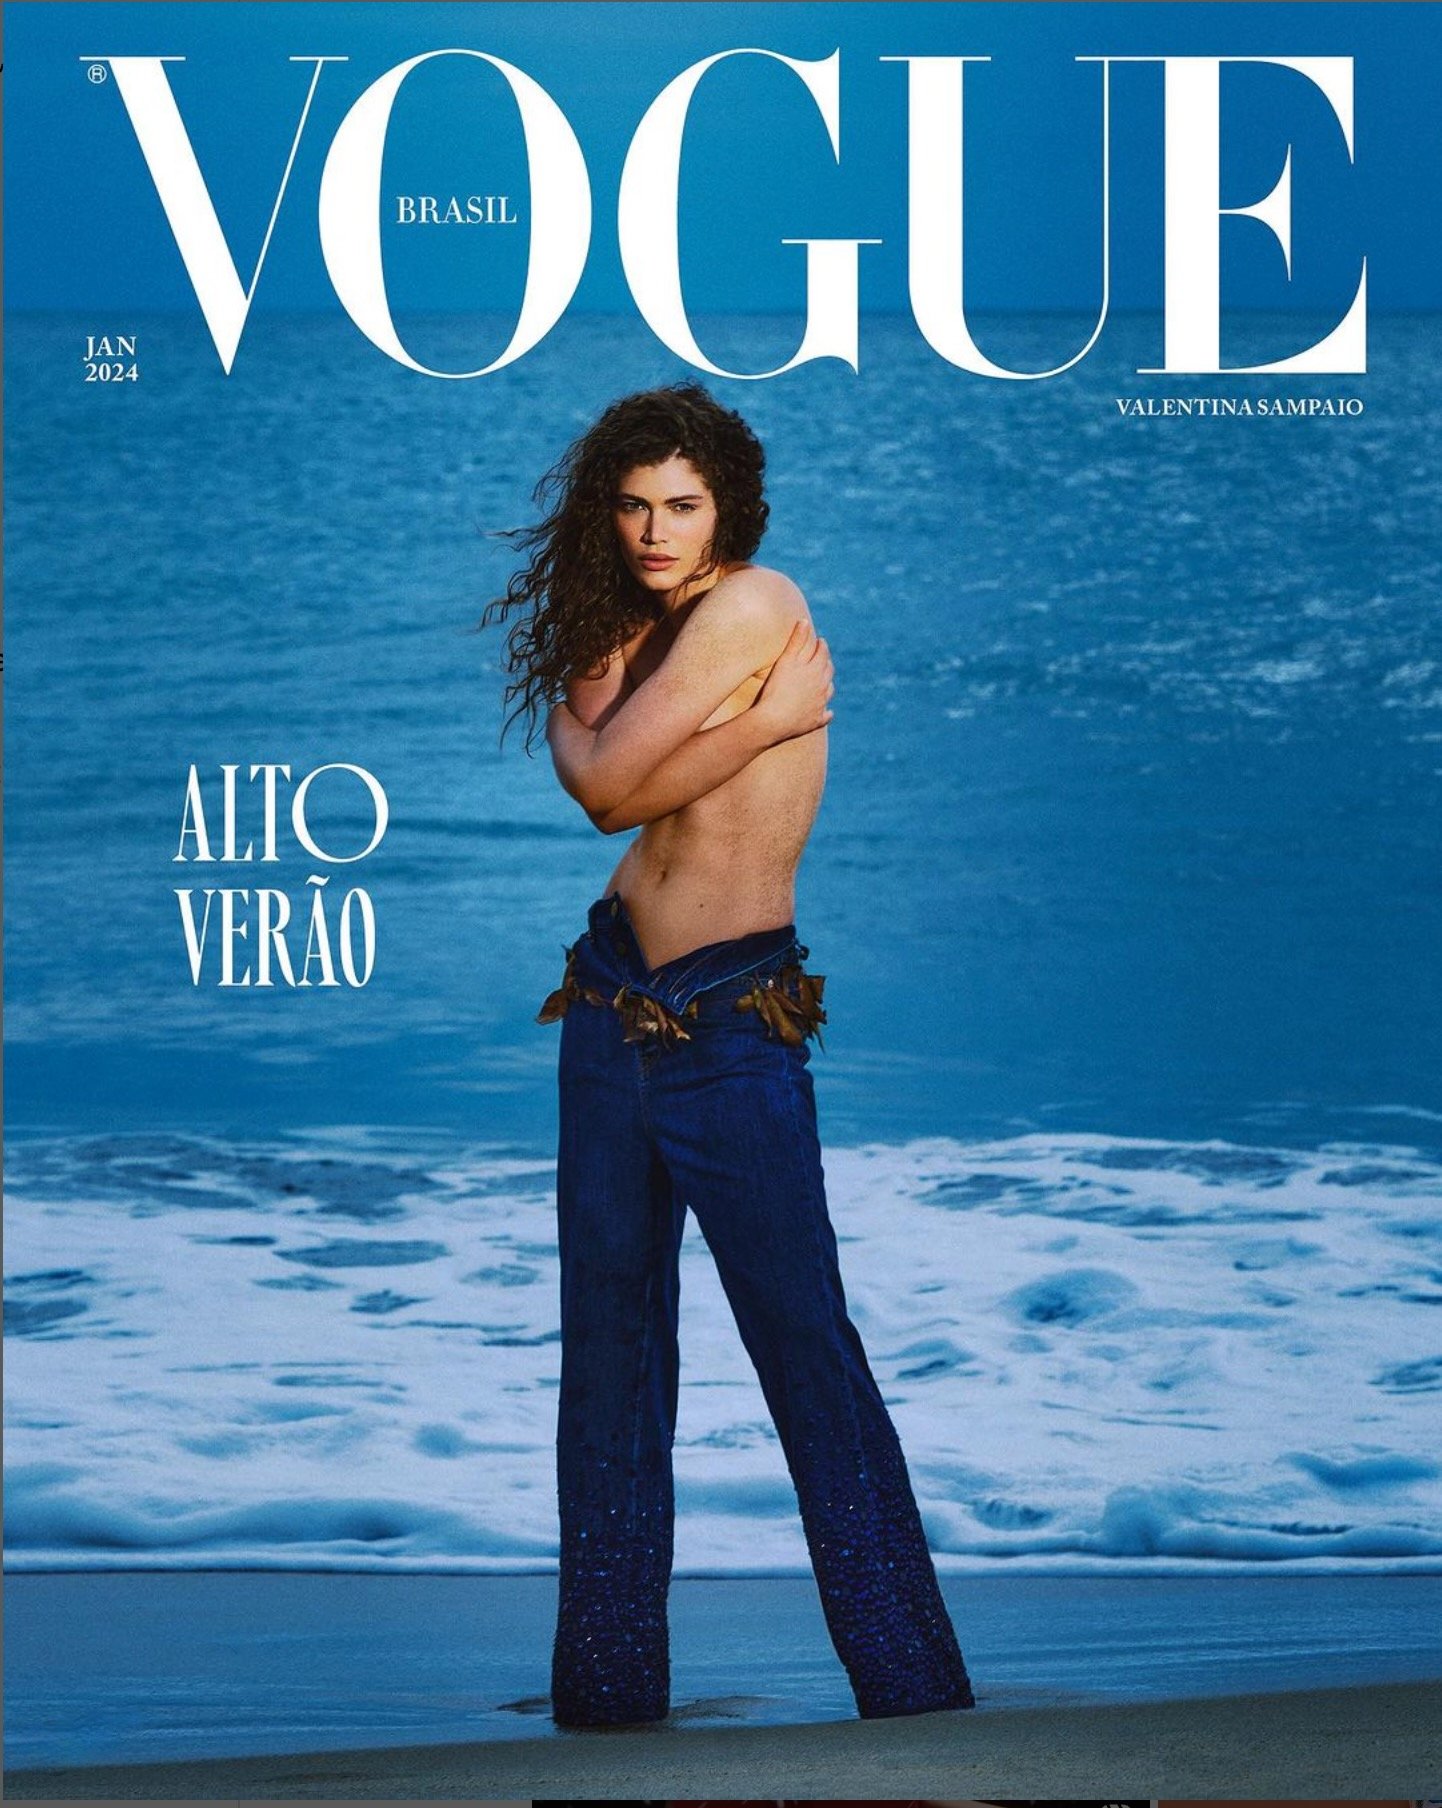 Valentina-Sampaio-by-Mariana-Maltoni-Covers-Vogue-Brazil-January 2024-2.jpeg